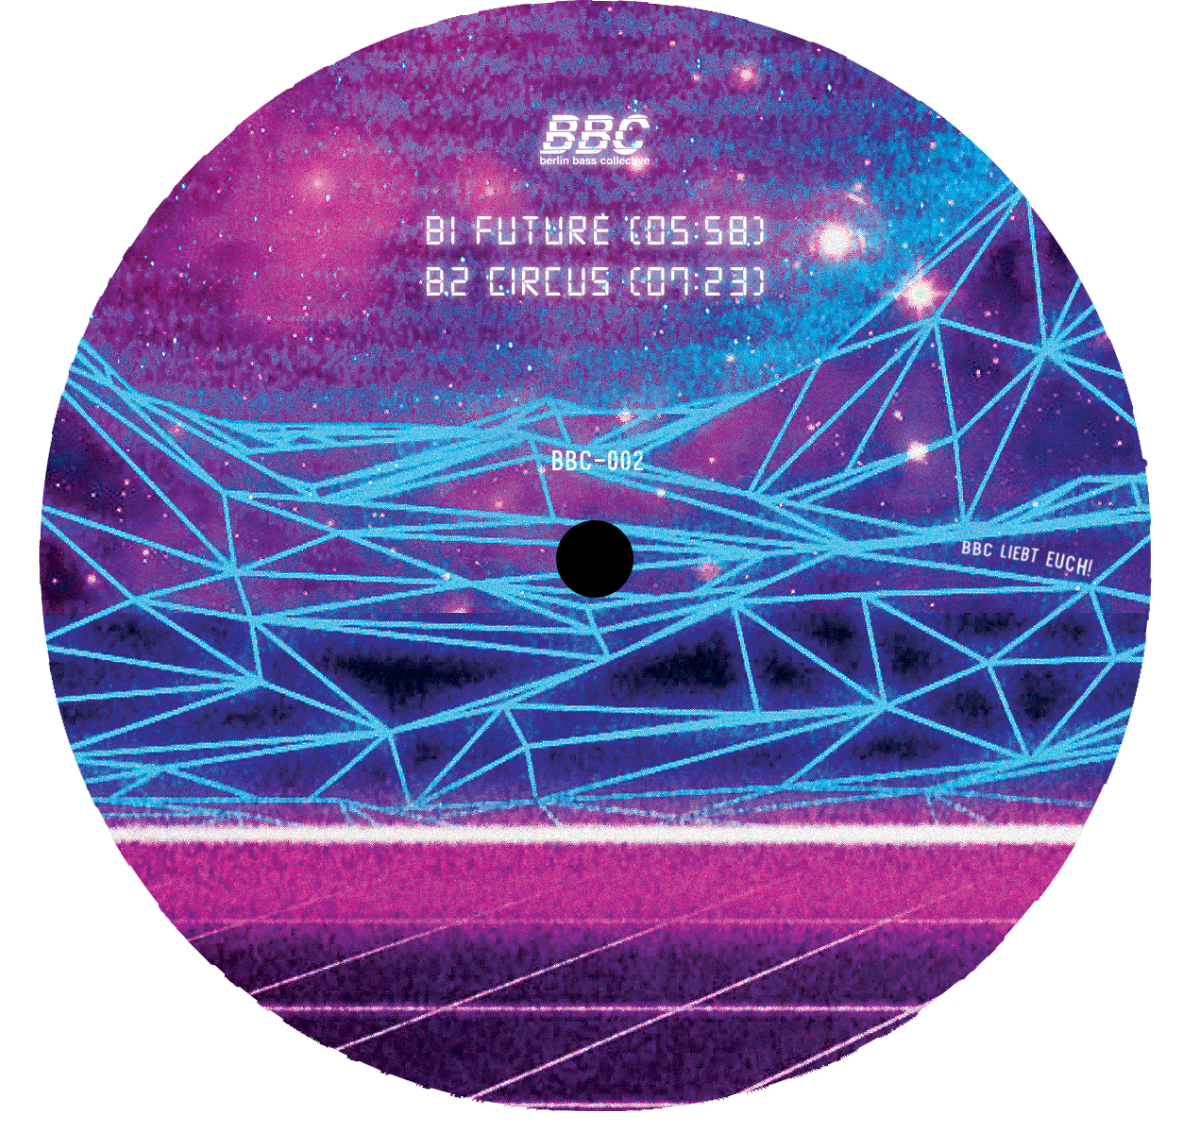 Bbc 002 Side B Sticker